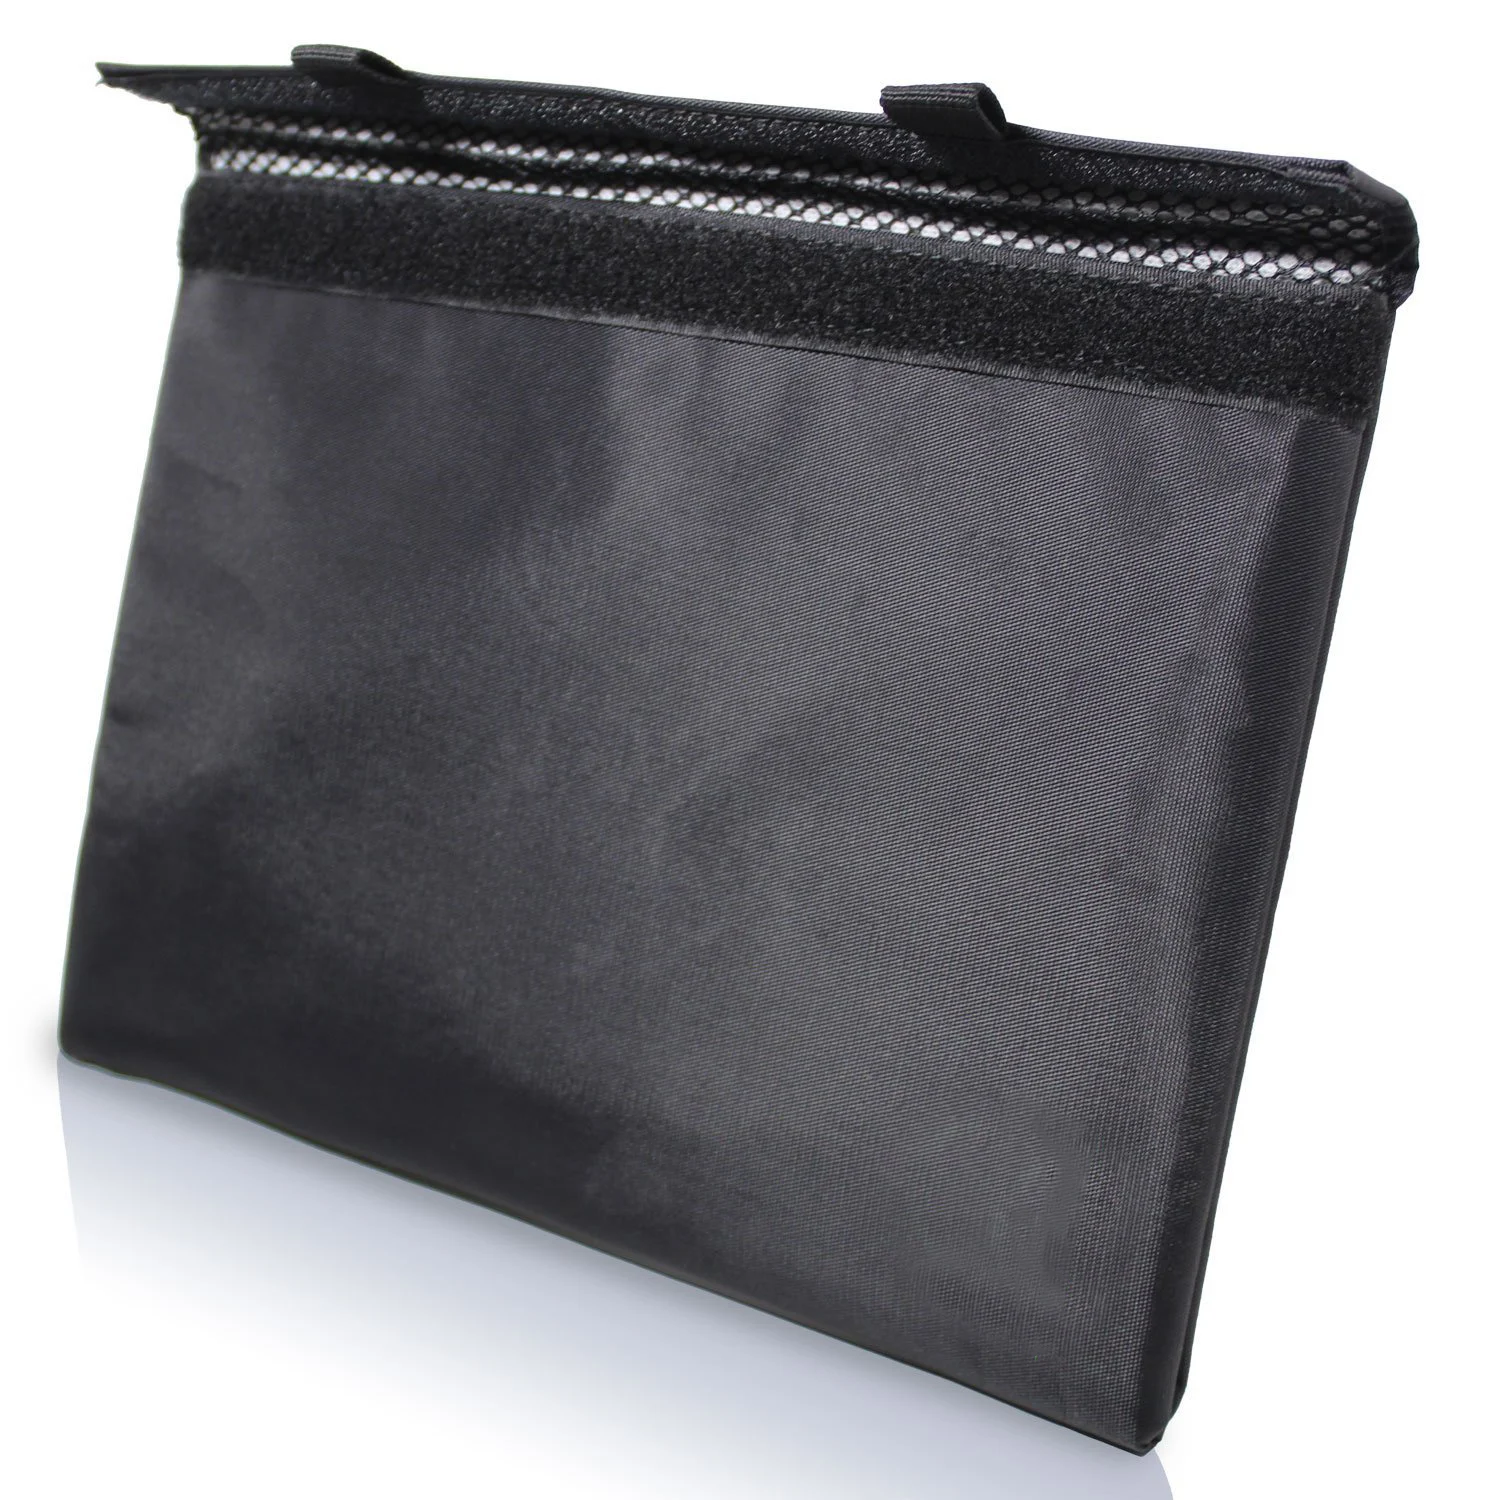 Newest Design High Quality Smell Proof Bag Reusable Smellproof Bag ...